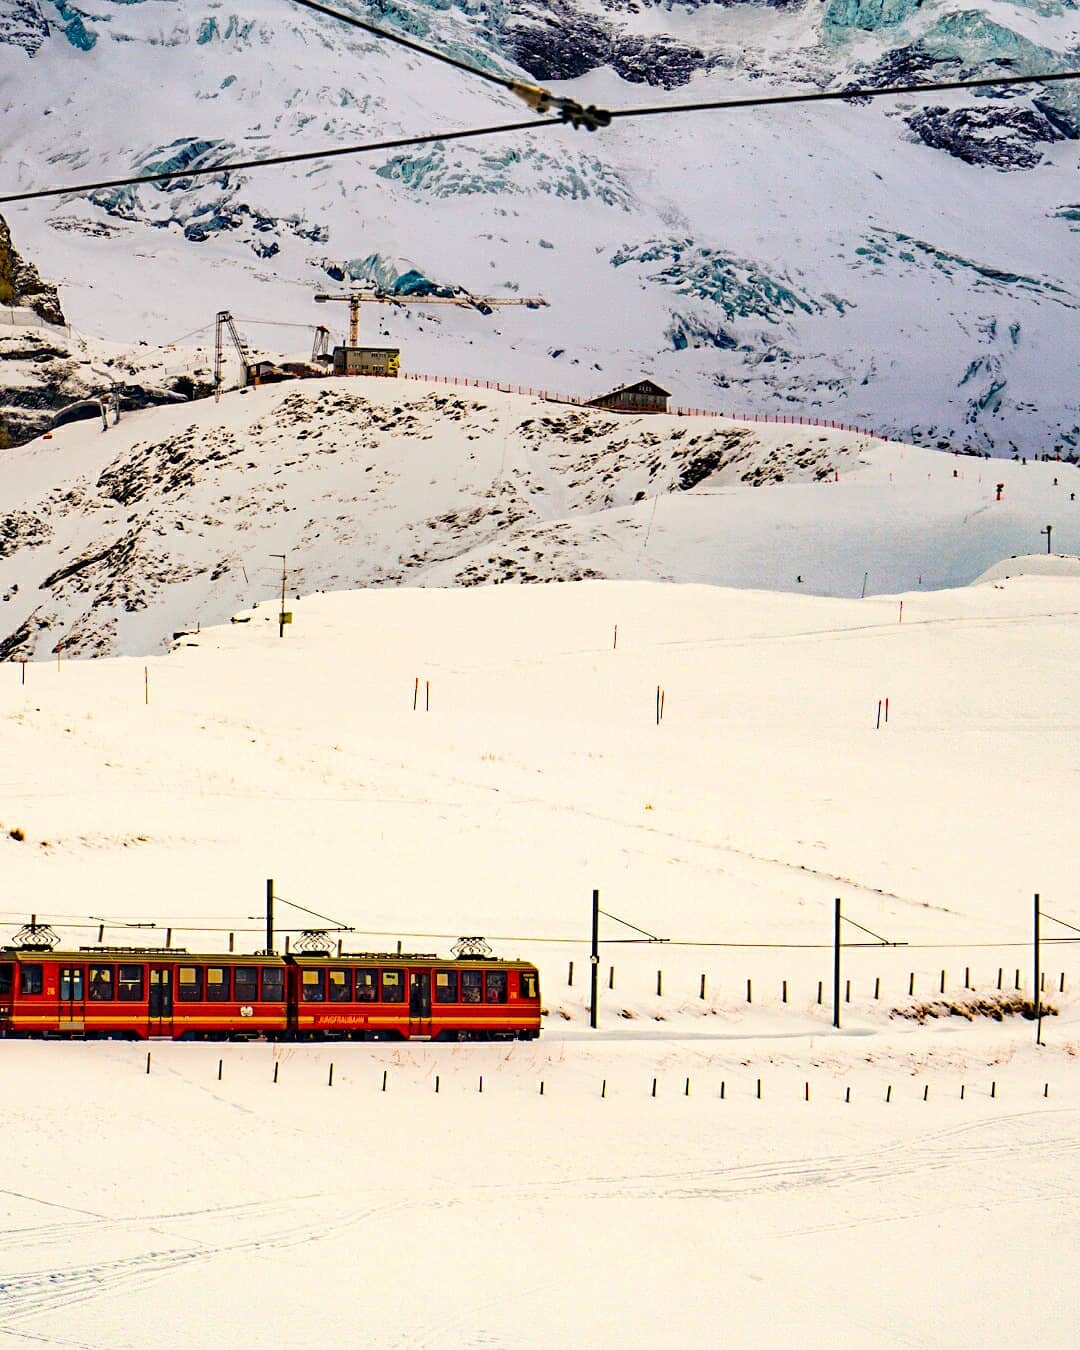 Jungfraubahn - Jungfrau Region